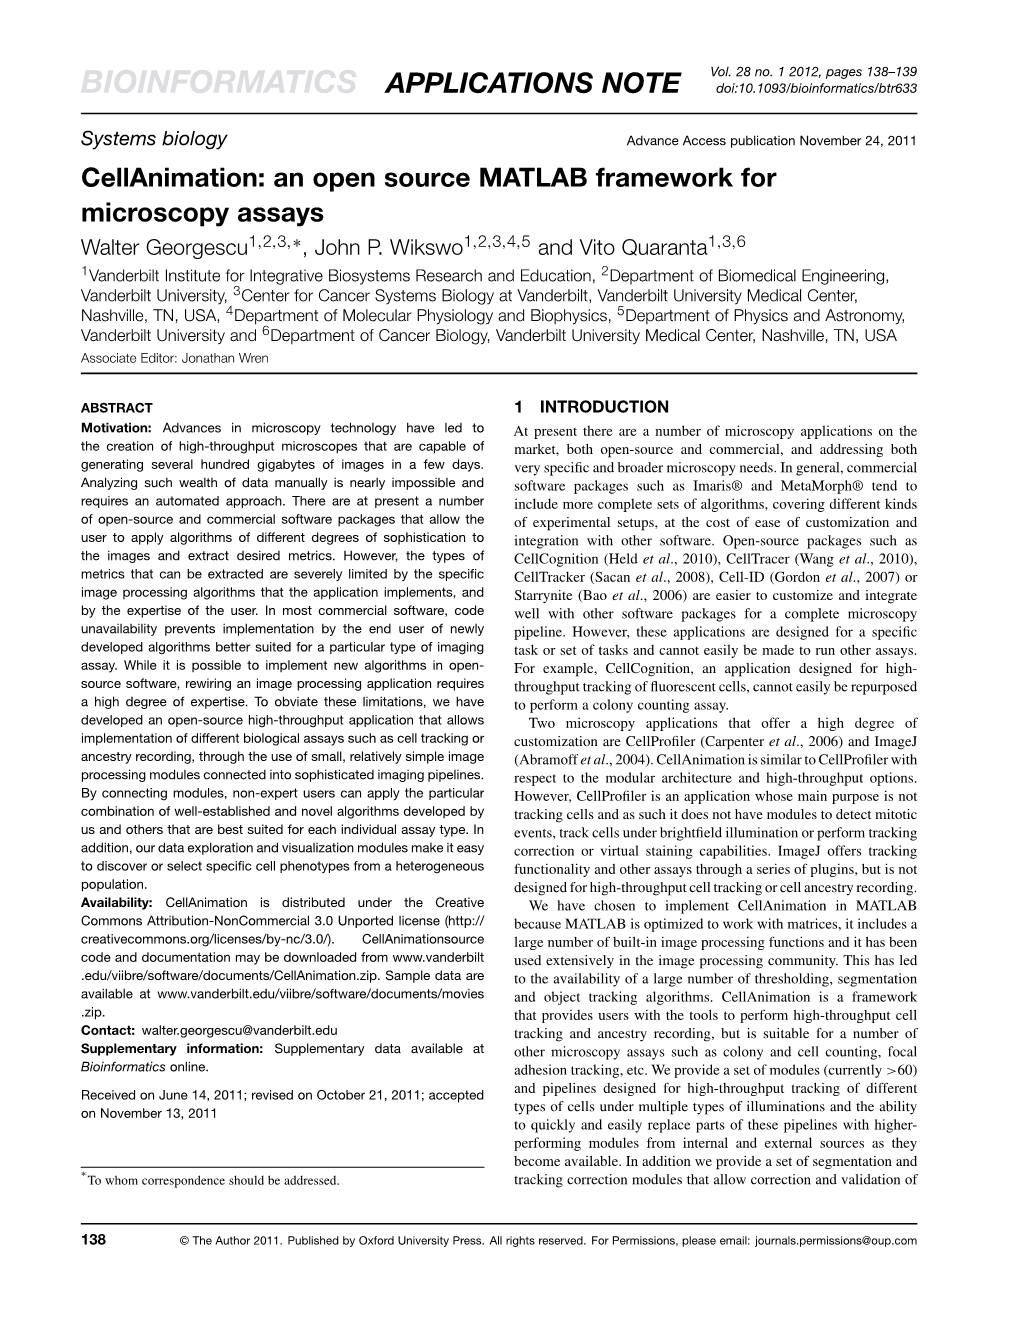 Cellanimation: an Open Source MATLAB Framework for Microscopy Assays Walter Georgescu1,2,3,∗, John P